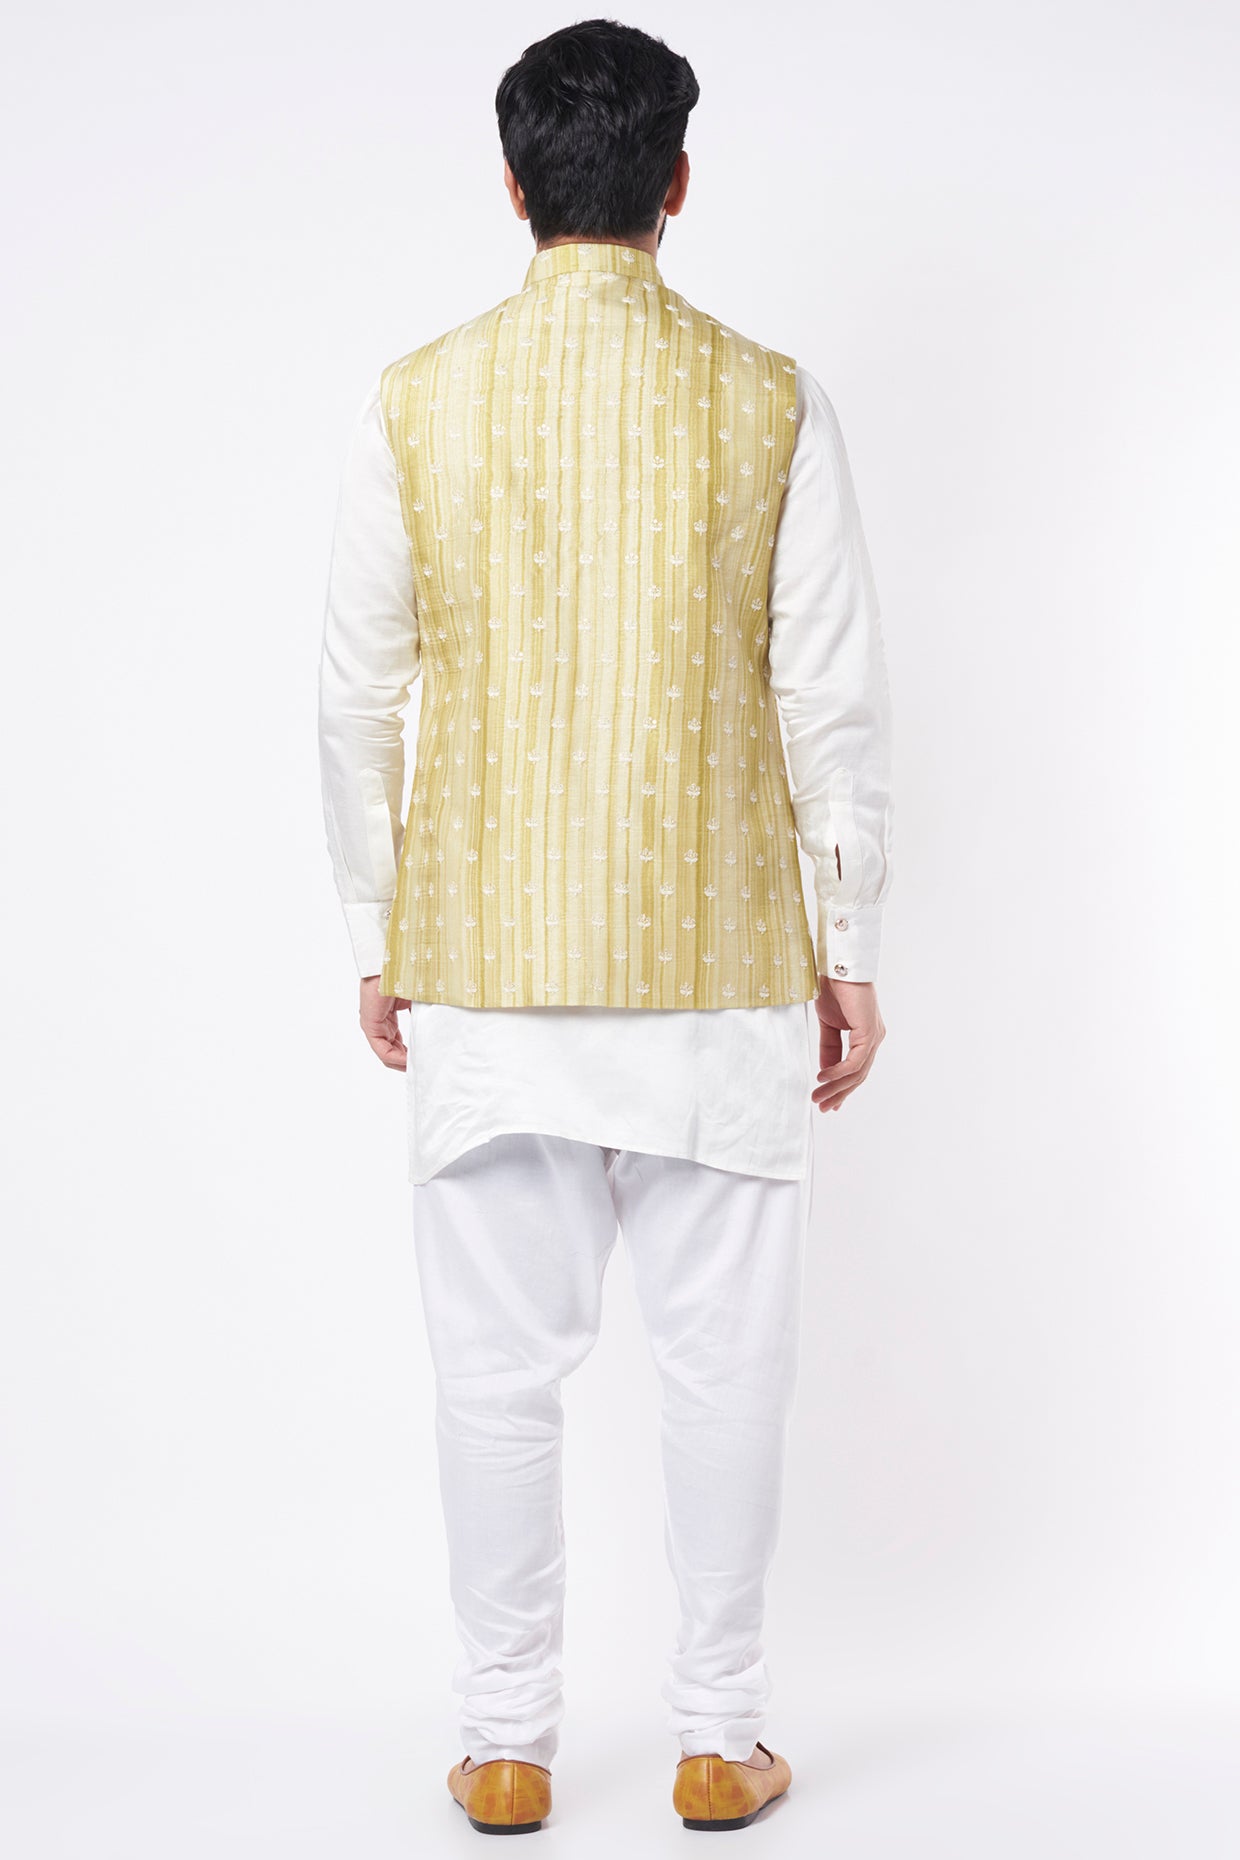 Embroidered Bundi Jacket with Kurta Set - Spring Break